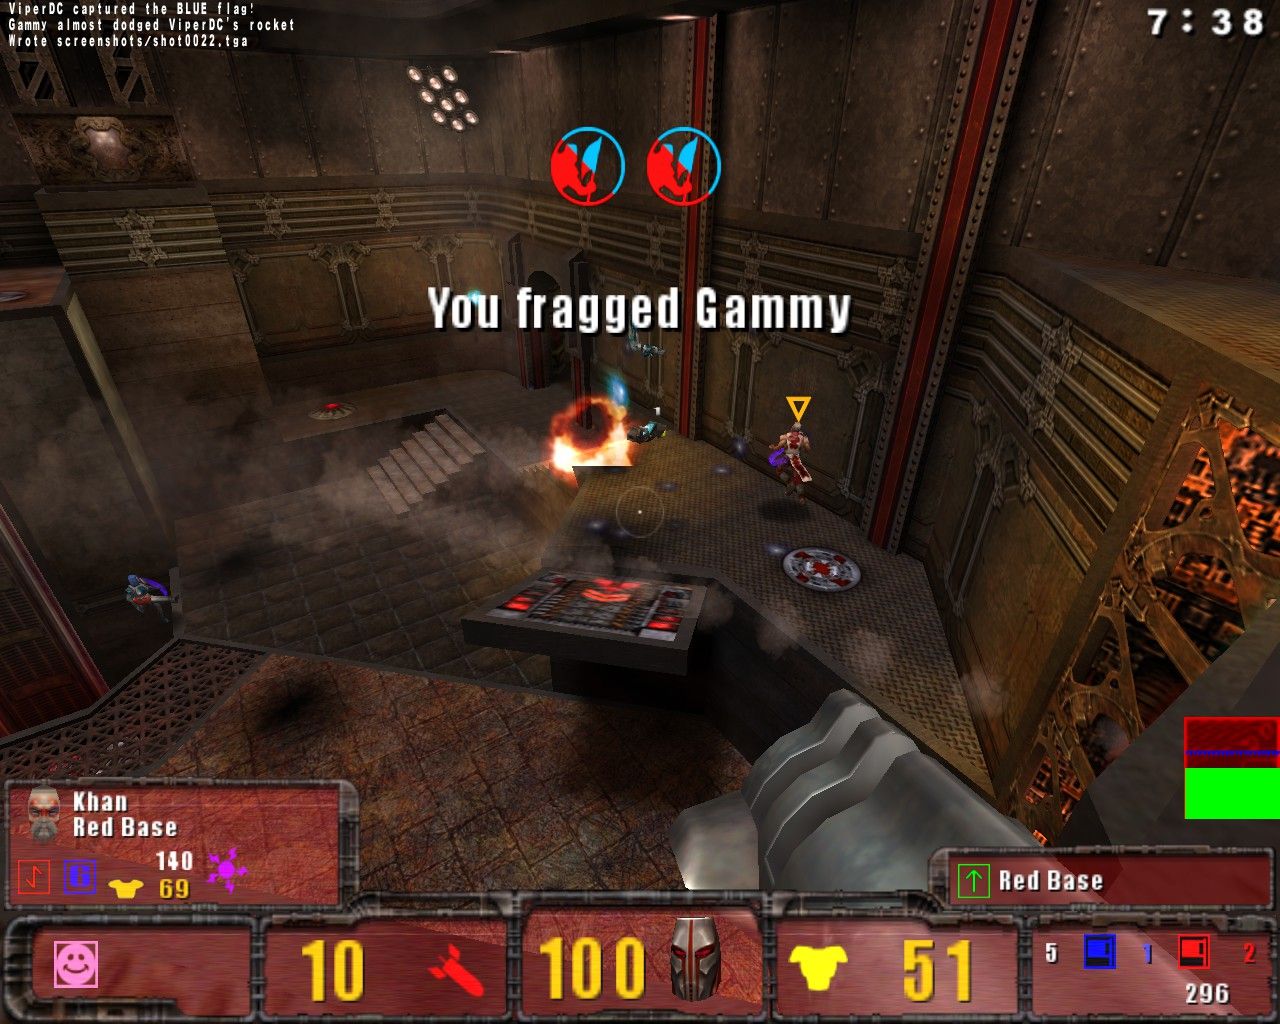 Play Quake Full Game